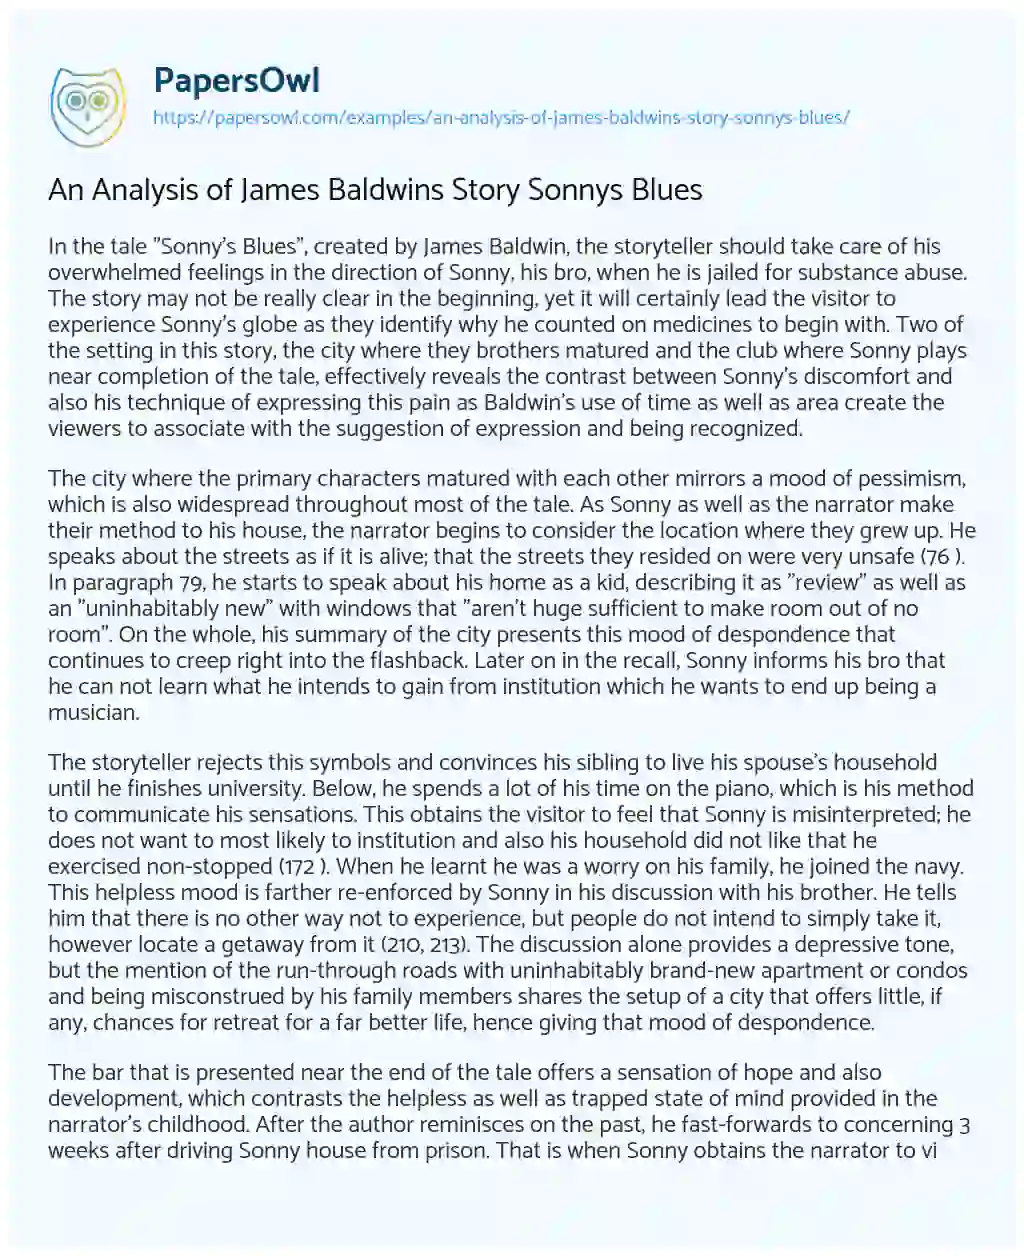 Essay on An Analysis of James Baldwins Story Sonnys Blues